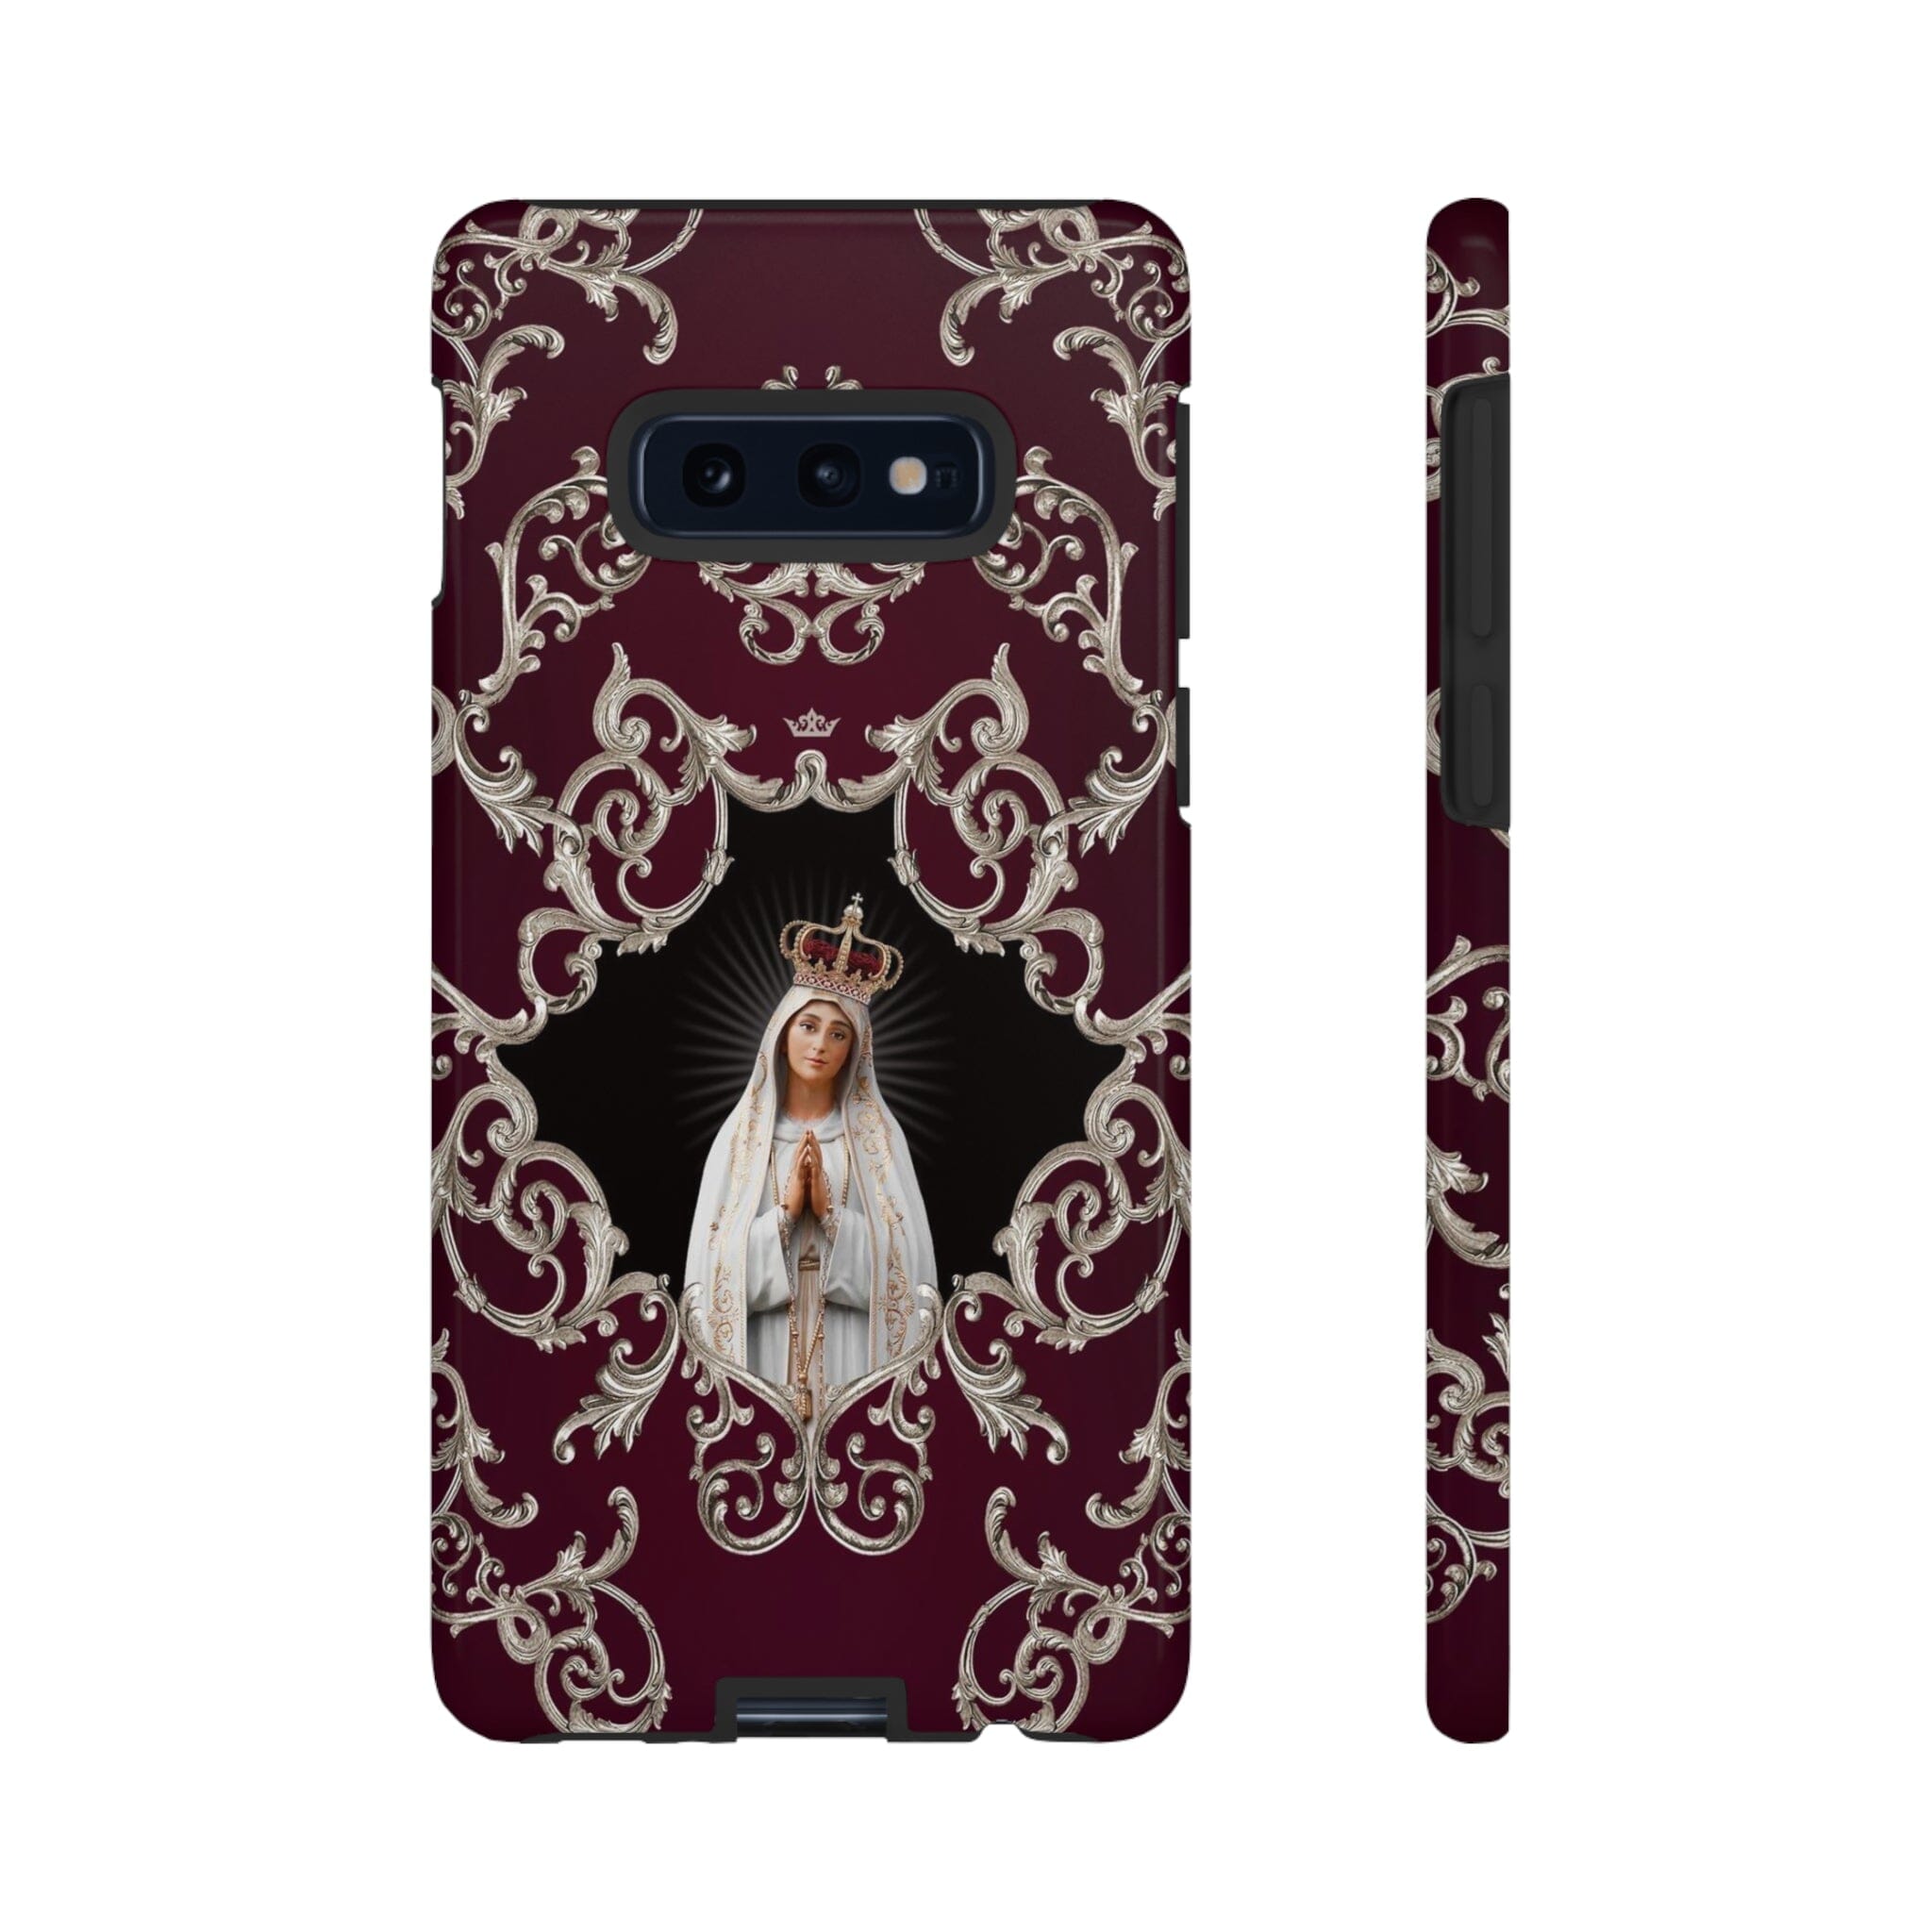 Our Lady of Fatima Hard Phone Case (Baroque Mahogany)